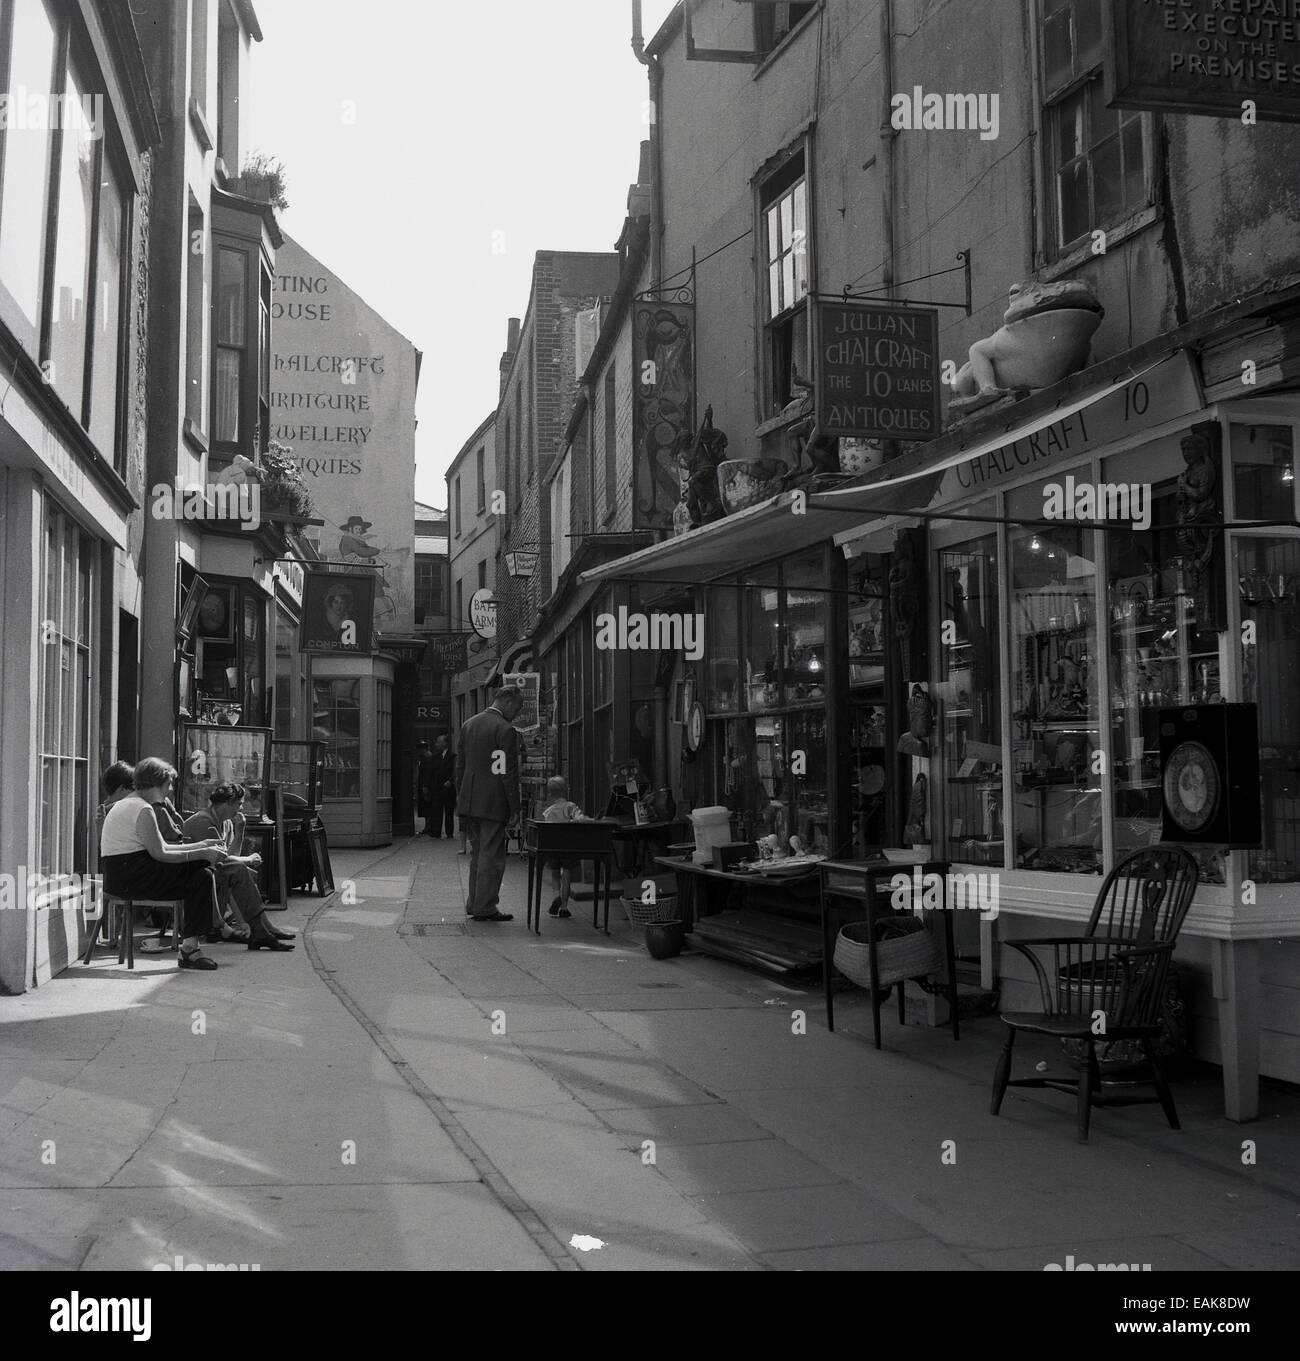 1950, historische, Reihe kleiner antiker oder Bric-und-bric-Geschäften in den Gassen Passage in der Altstadt Altstadt, Hastings, East Sussex, England. Stockfoto